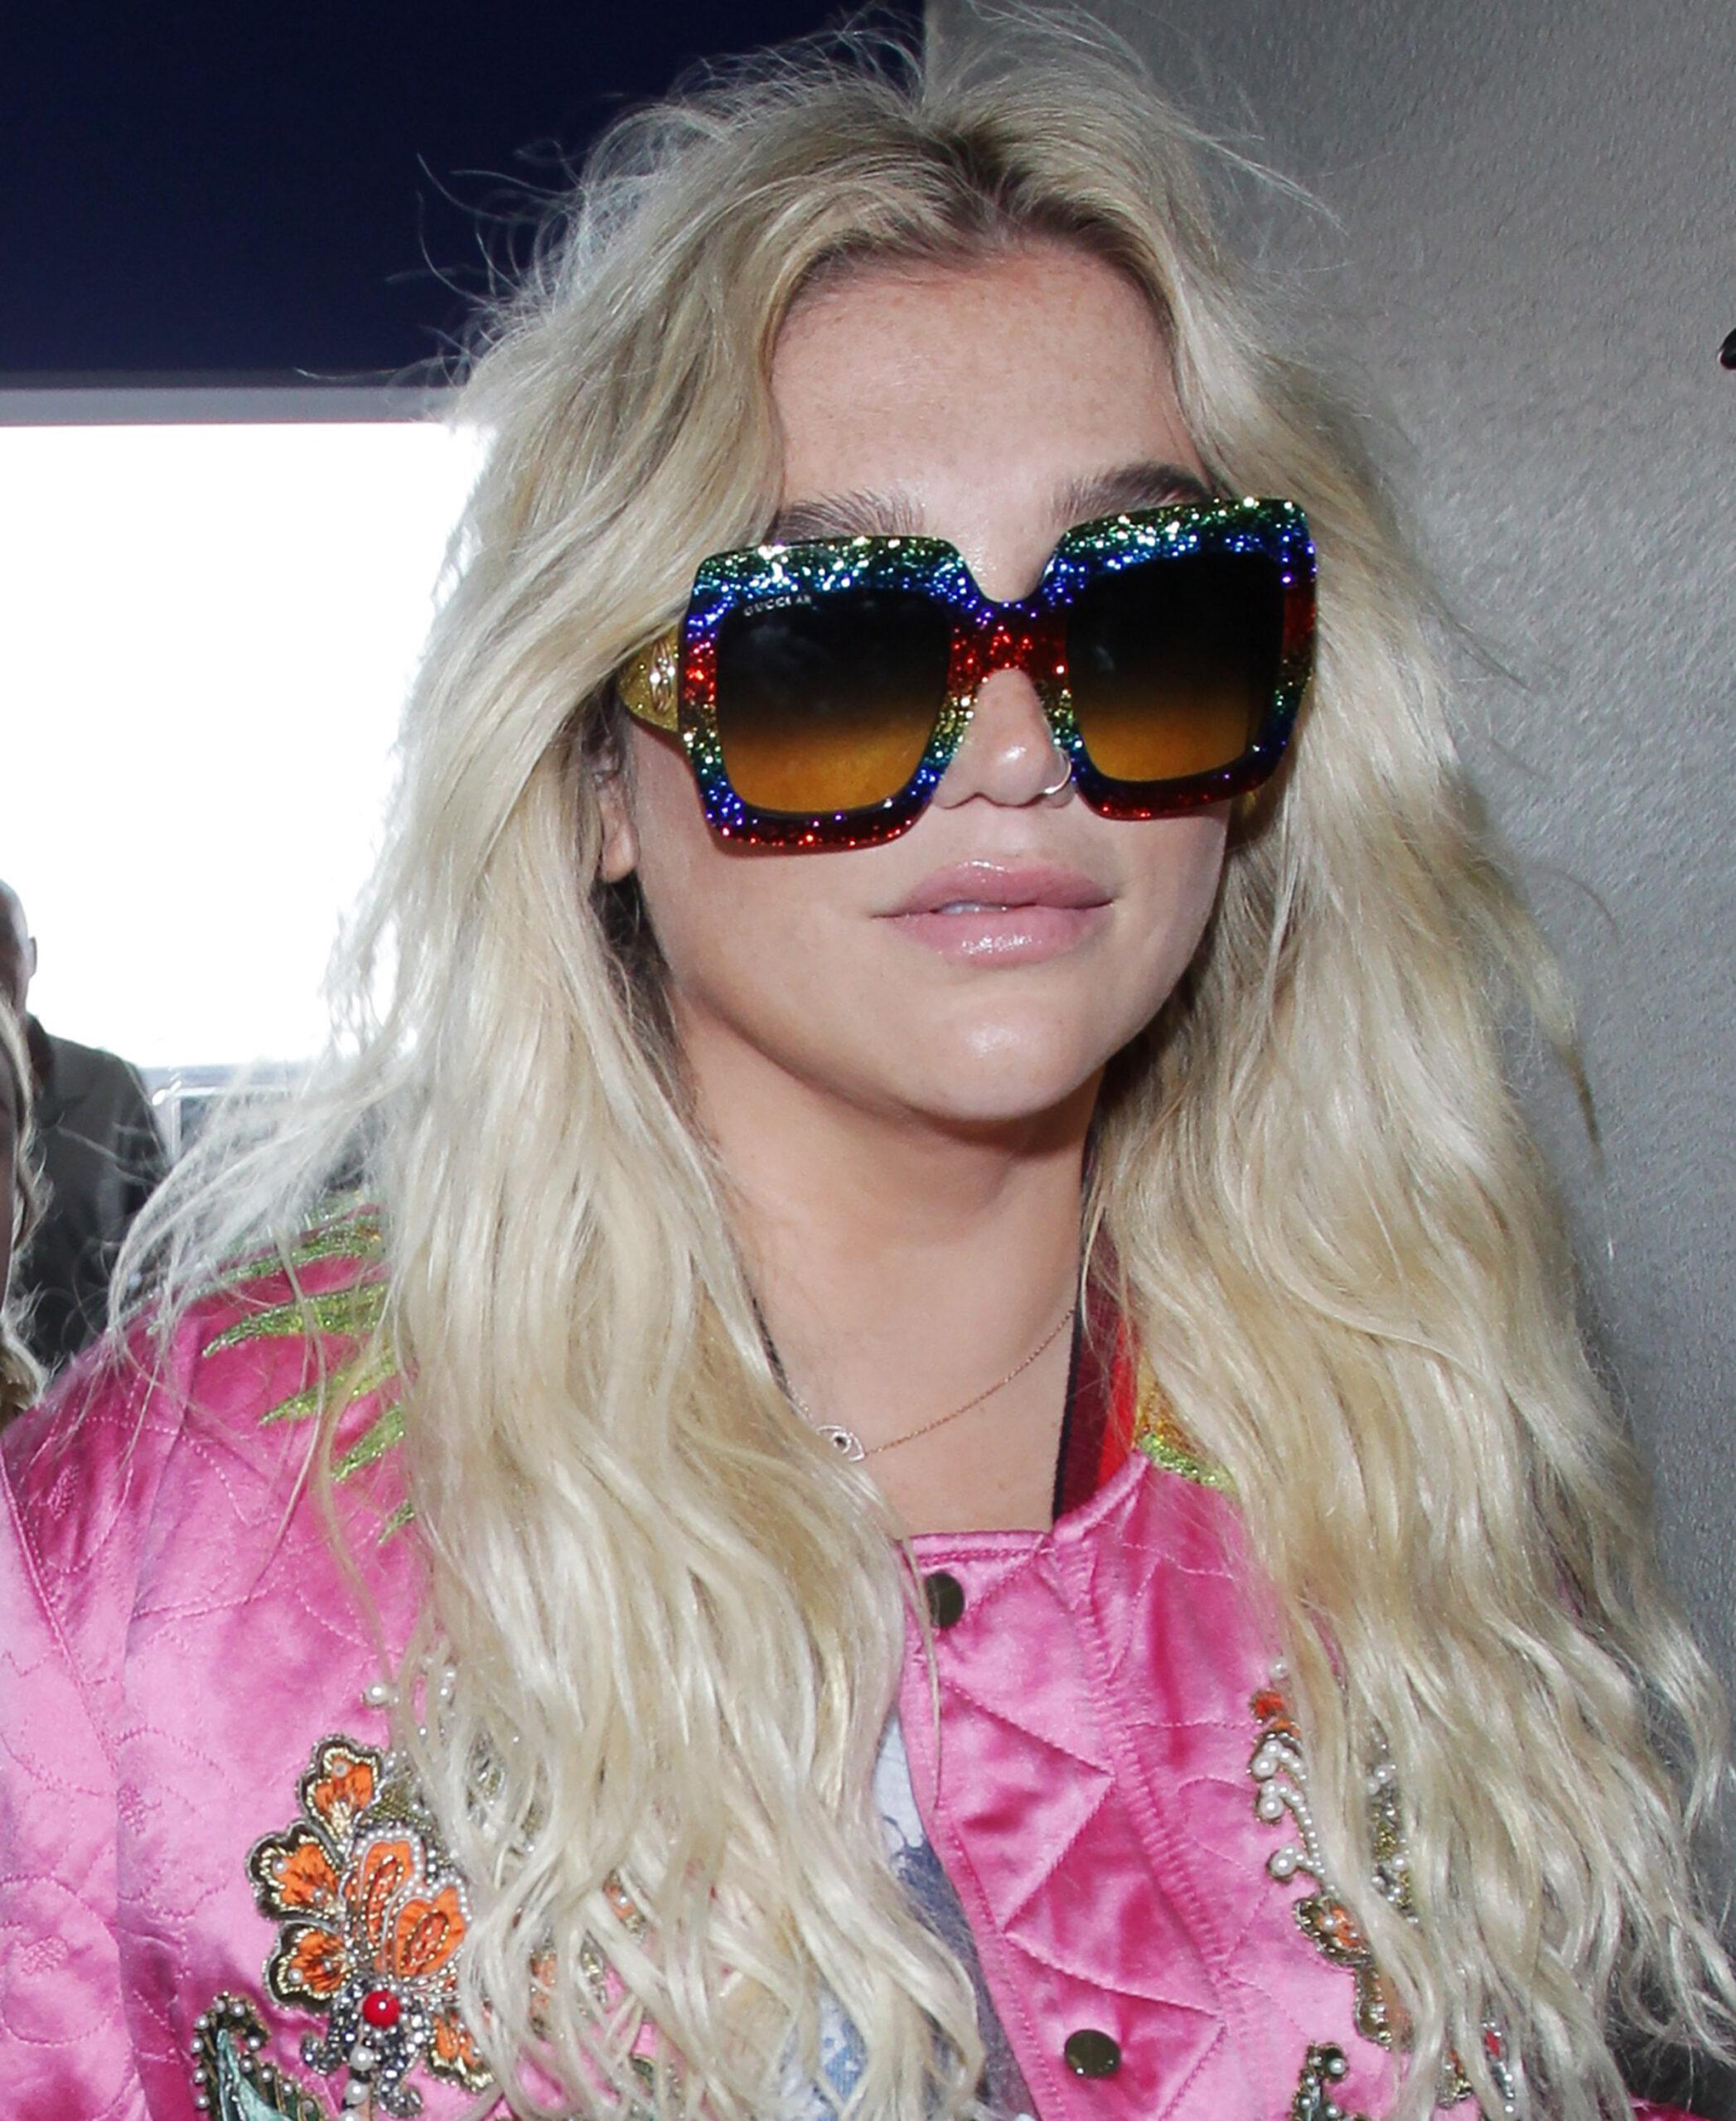 Kesha Ke ha arriving at the Los Angeles International Airport